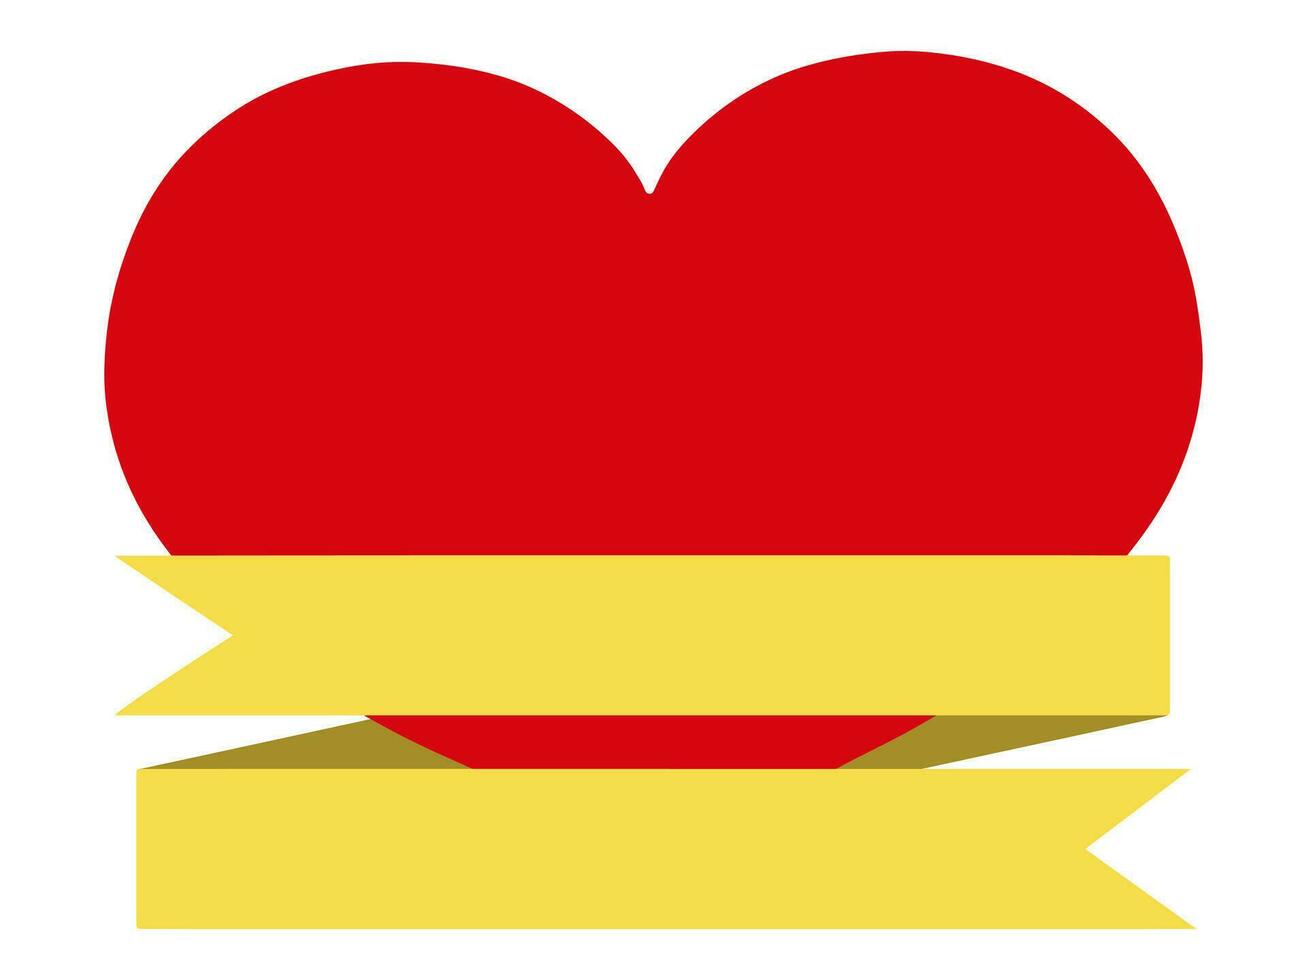 valentijnsdag dag hart achtergrond illustratie vector